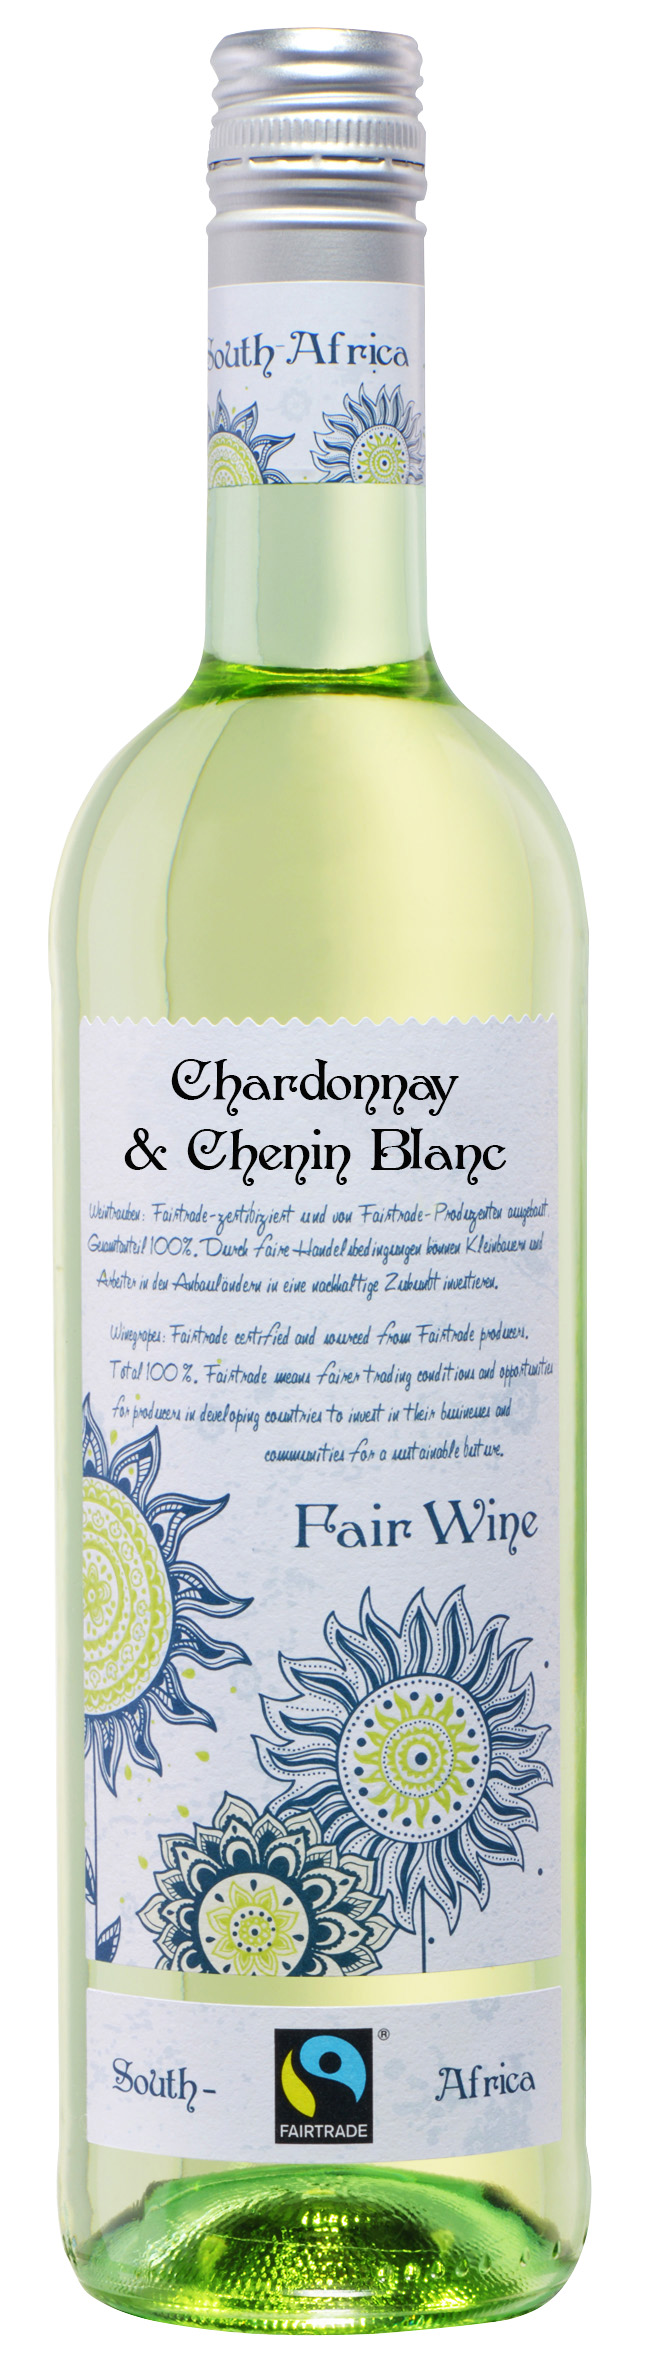 Chardonnay & Chenin Blanc